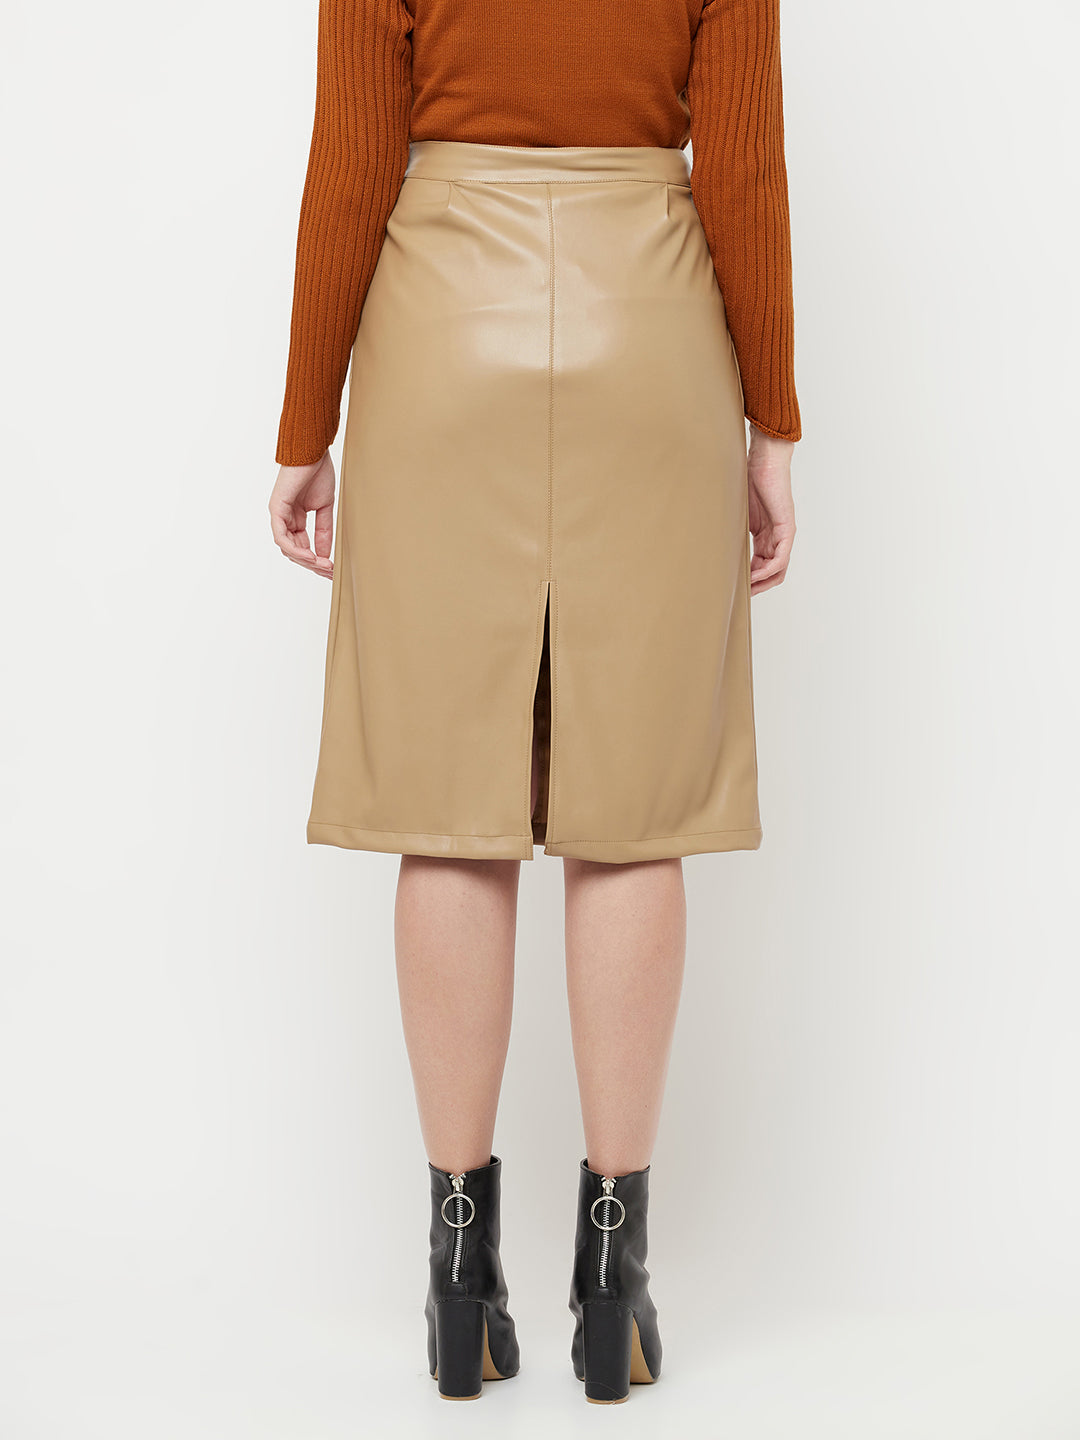 Beige Midi A-Line Leather Skirt - Women Skirts